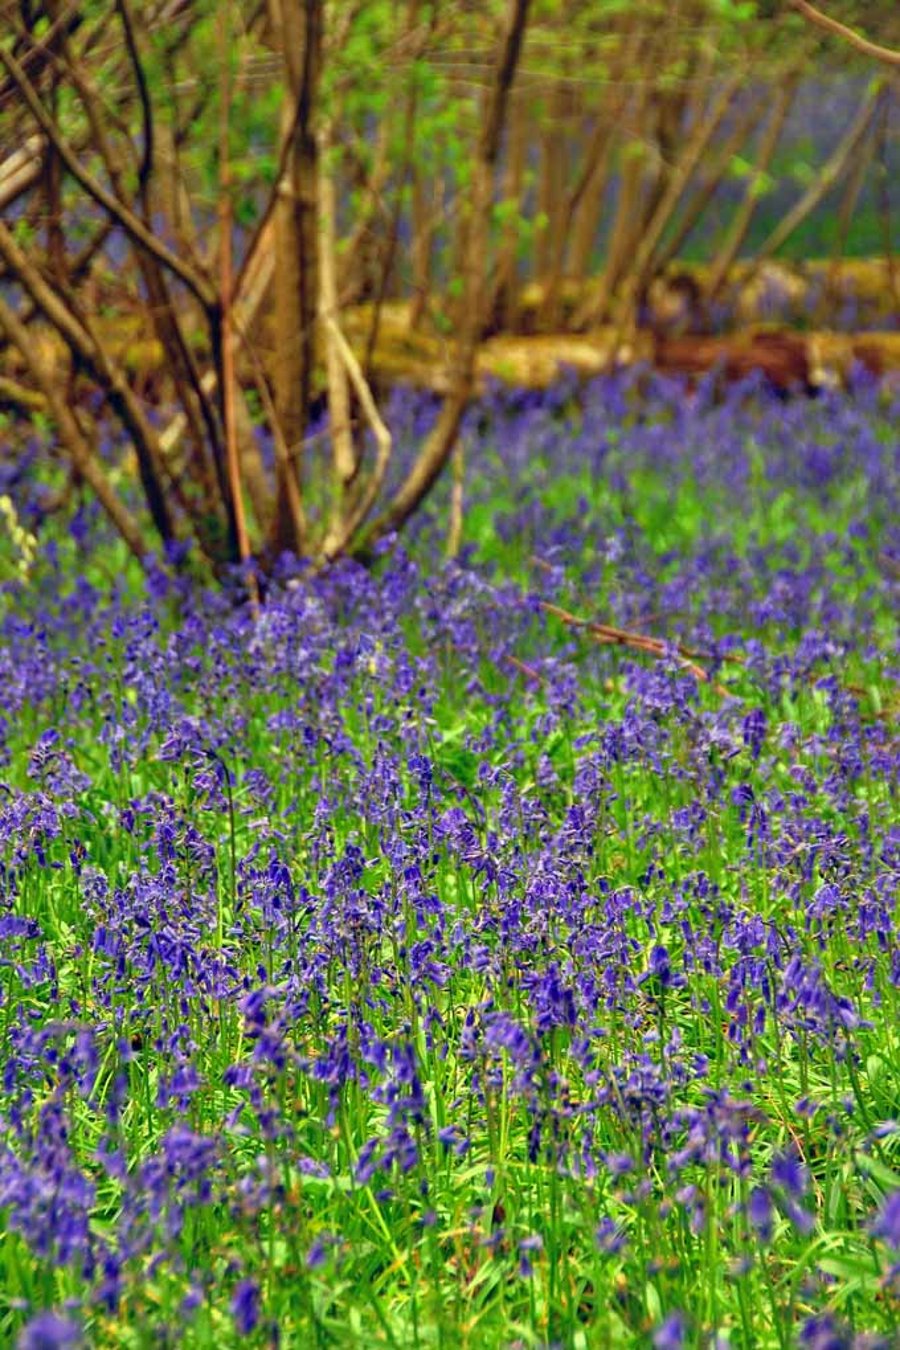 Bluebell Woods Spring Flowers Basildon Park Photograph Print